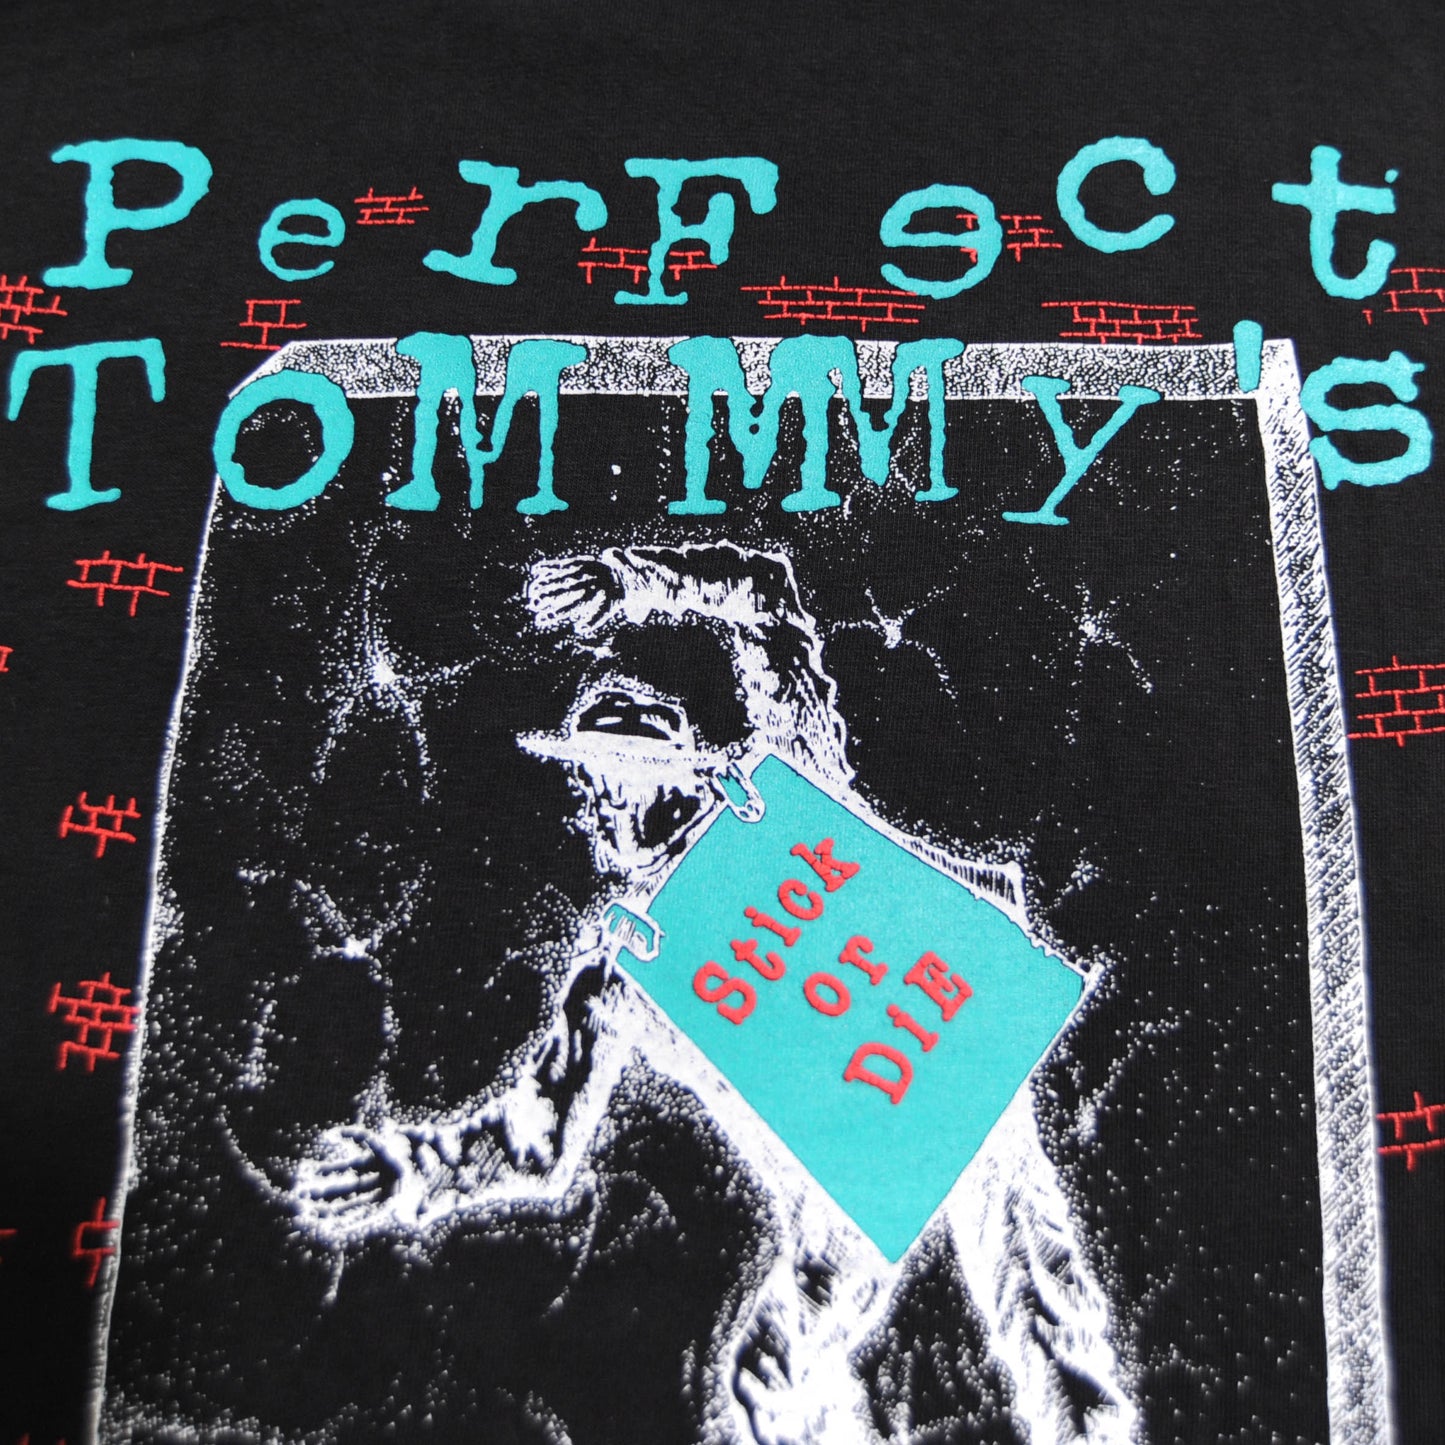 90's ONEITA Perfect Tommy`sグラフィックTシャツ 黒 (L)/A2767S-SO